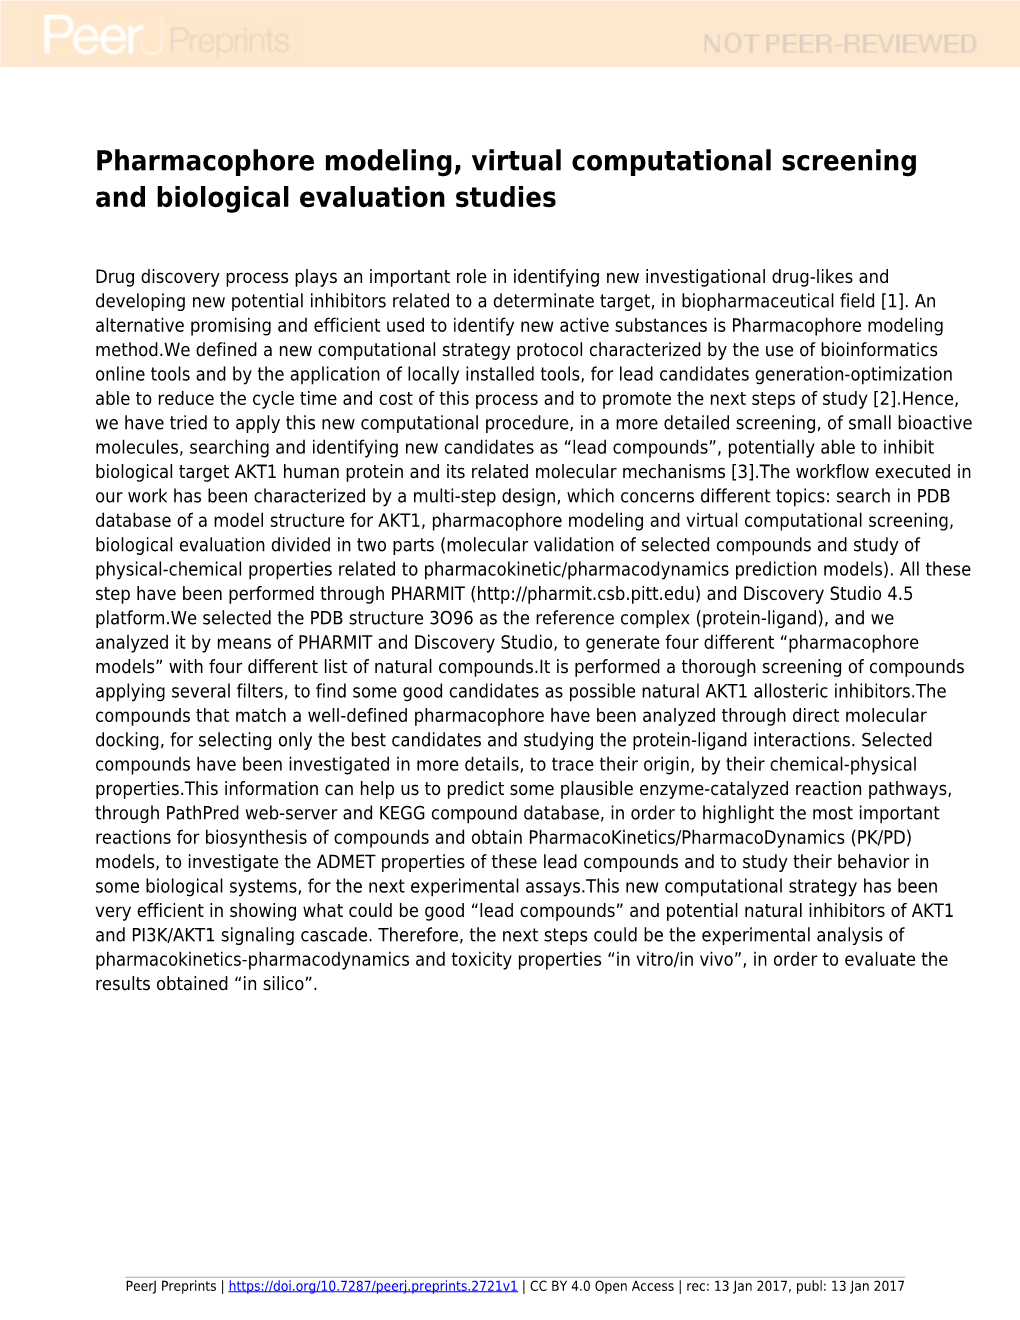 Pharmacophore Modeling, Virtual Computational Screening and Biological Evaluation Studies